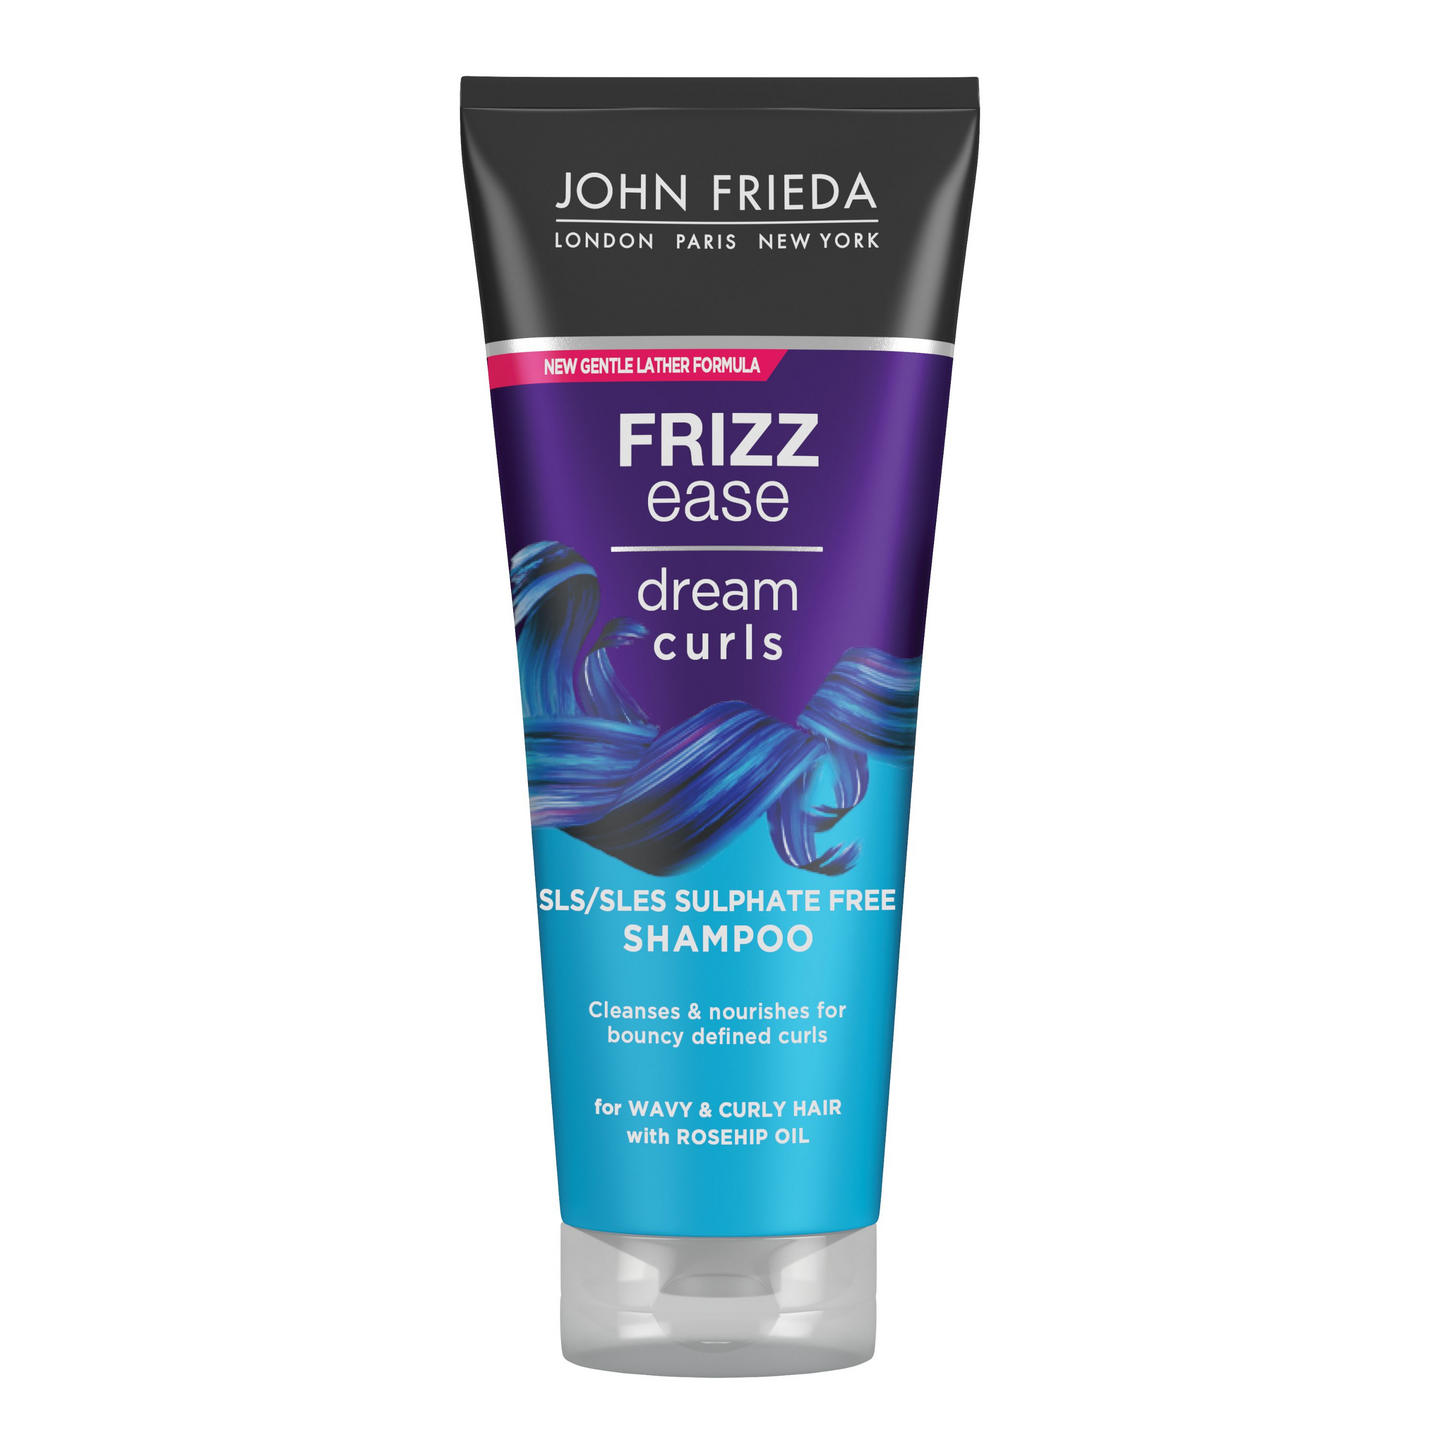 John Frieda Frizz Ease shampoo 250ml Dream Curls